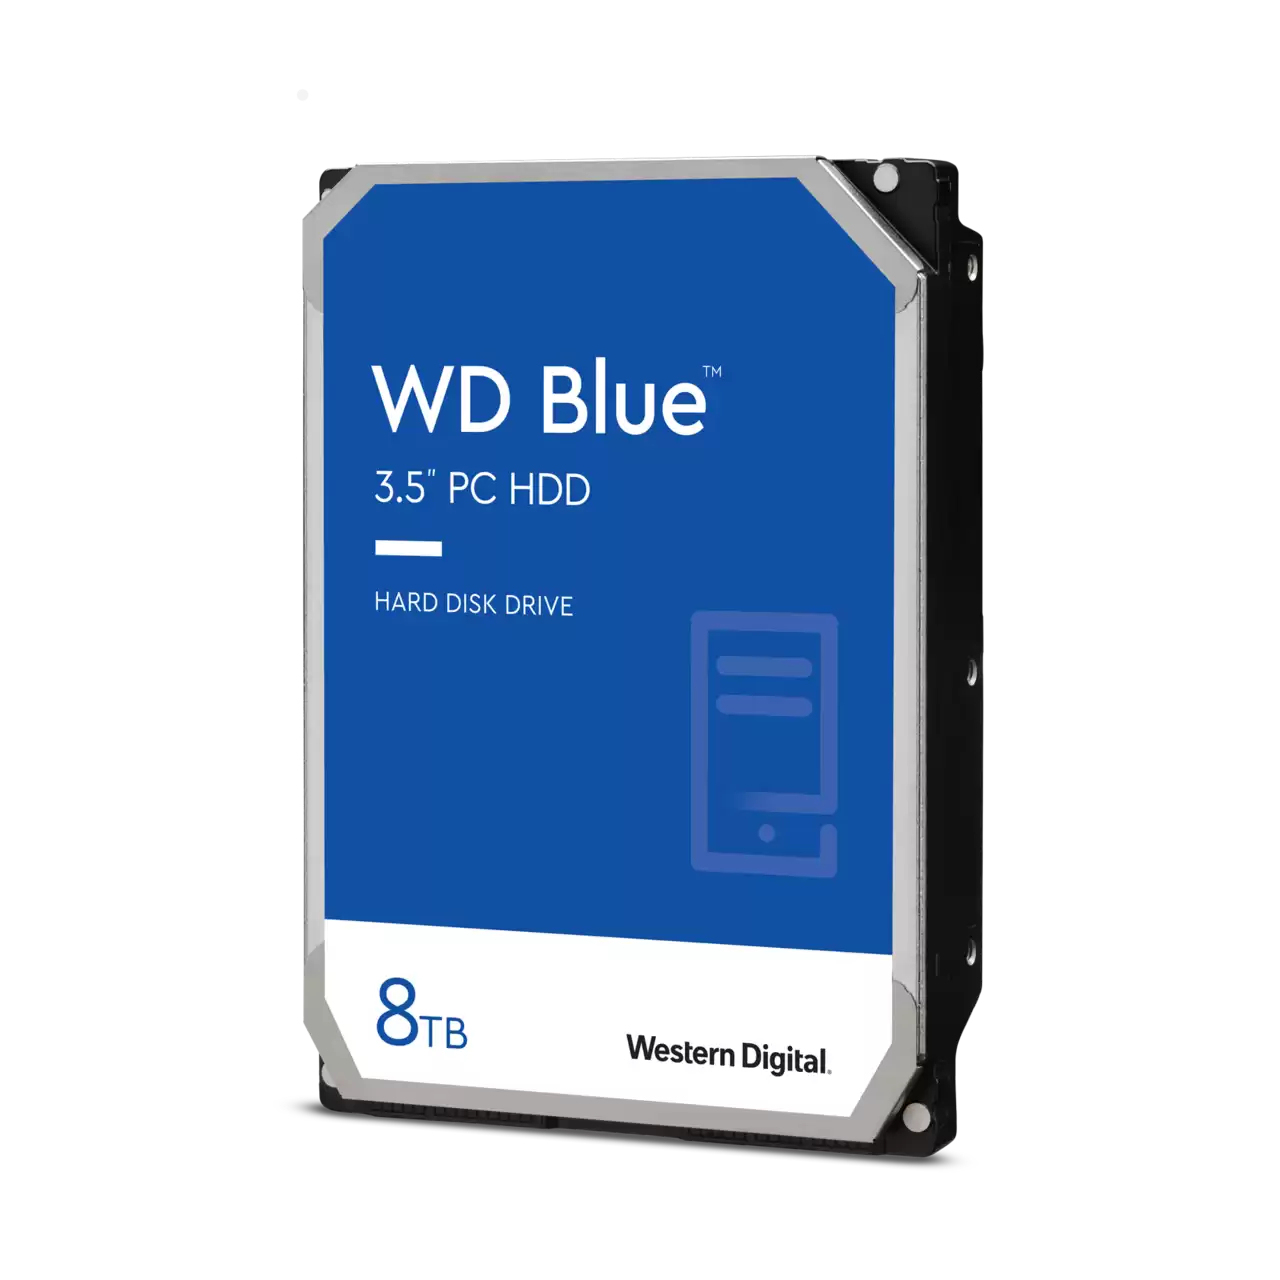 zuiden geleidelijk straal Western Digital WD Blue 8TB SATA 6Gb/s HDD internal 3.5inch serial ATA  128MB cache 5640 RPM RoHS compliant Bulk | Staples